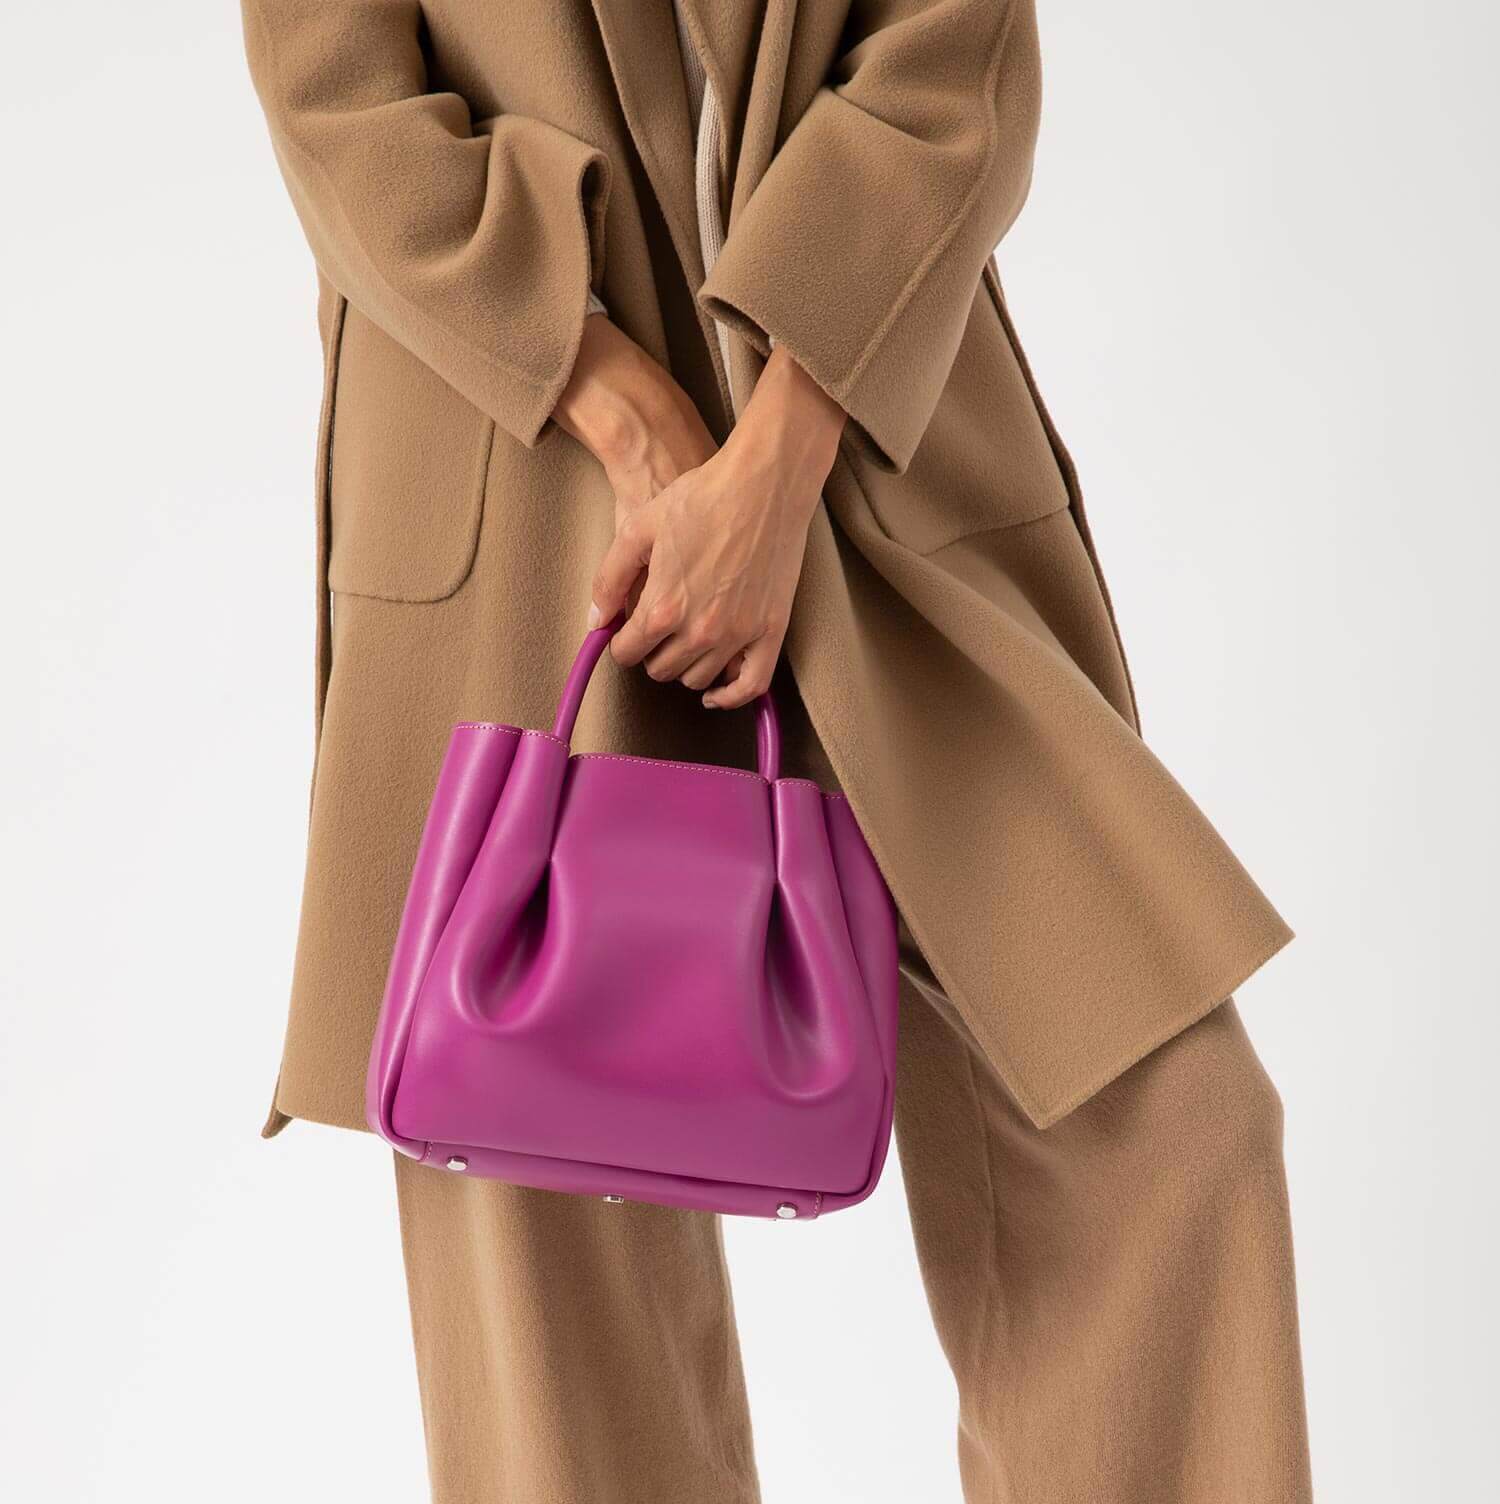 Amalfi Midi Leather Tote Bag - Blush Pink by Alexandra de Curtis